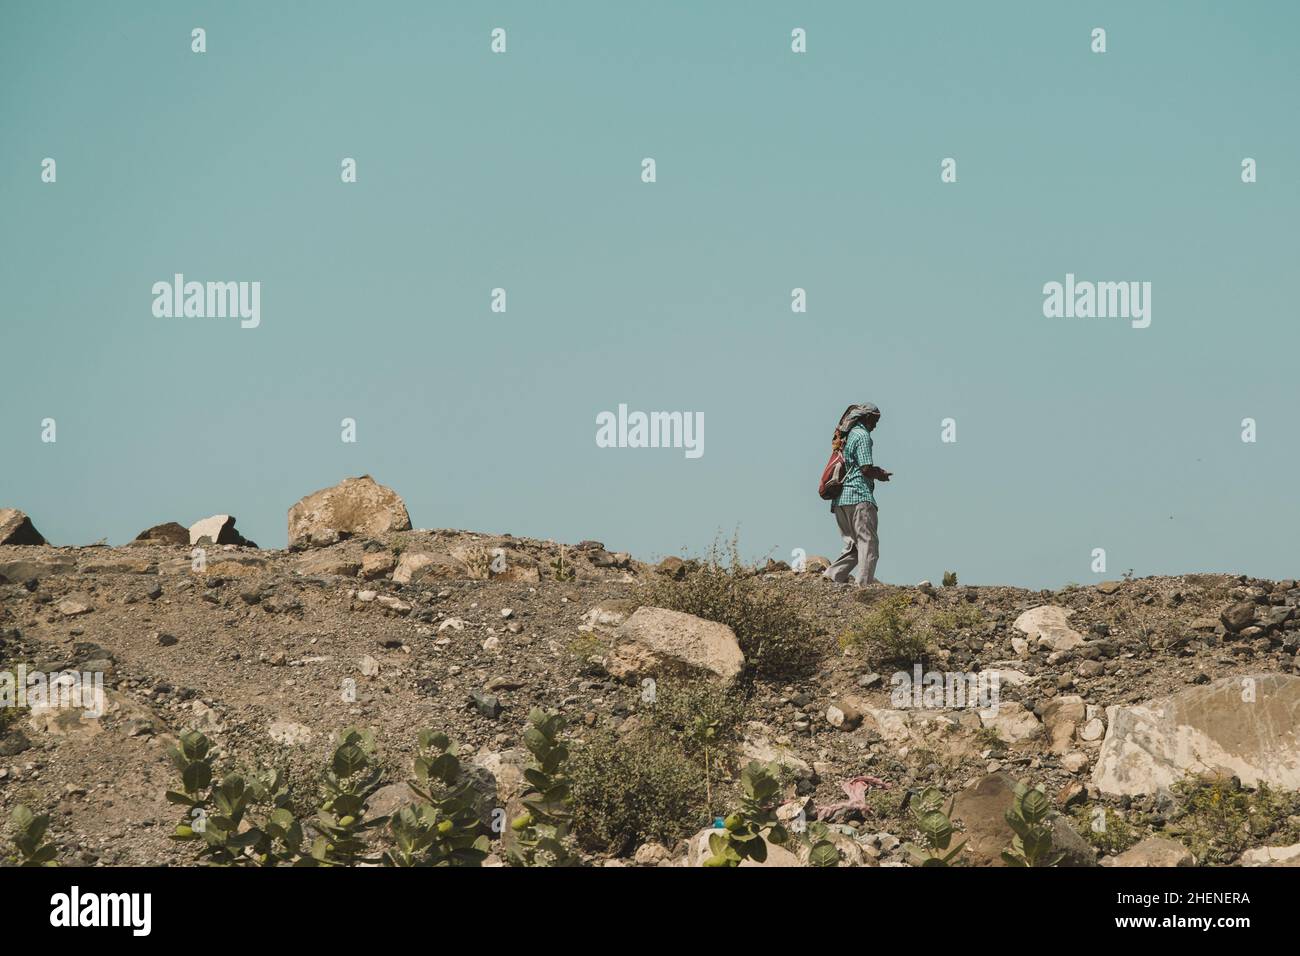 Djibouti, Djibouti - May 21, 2021: A Djiboutian alone man walking in the barren land. Editorial shot in Djibouti. Stock Photo